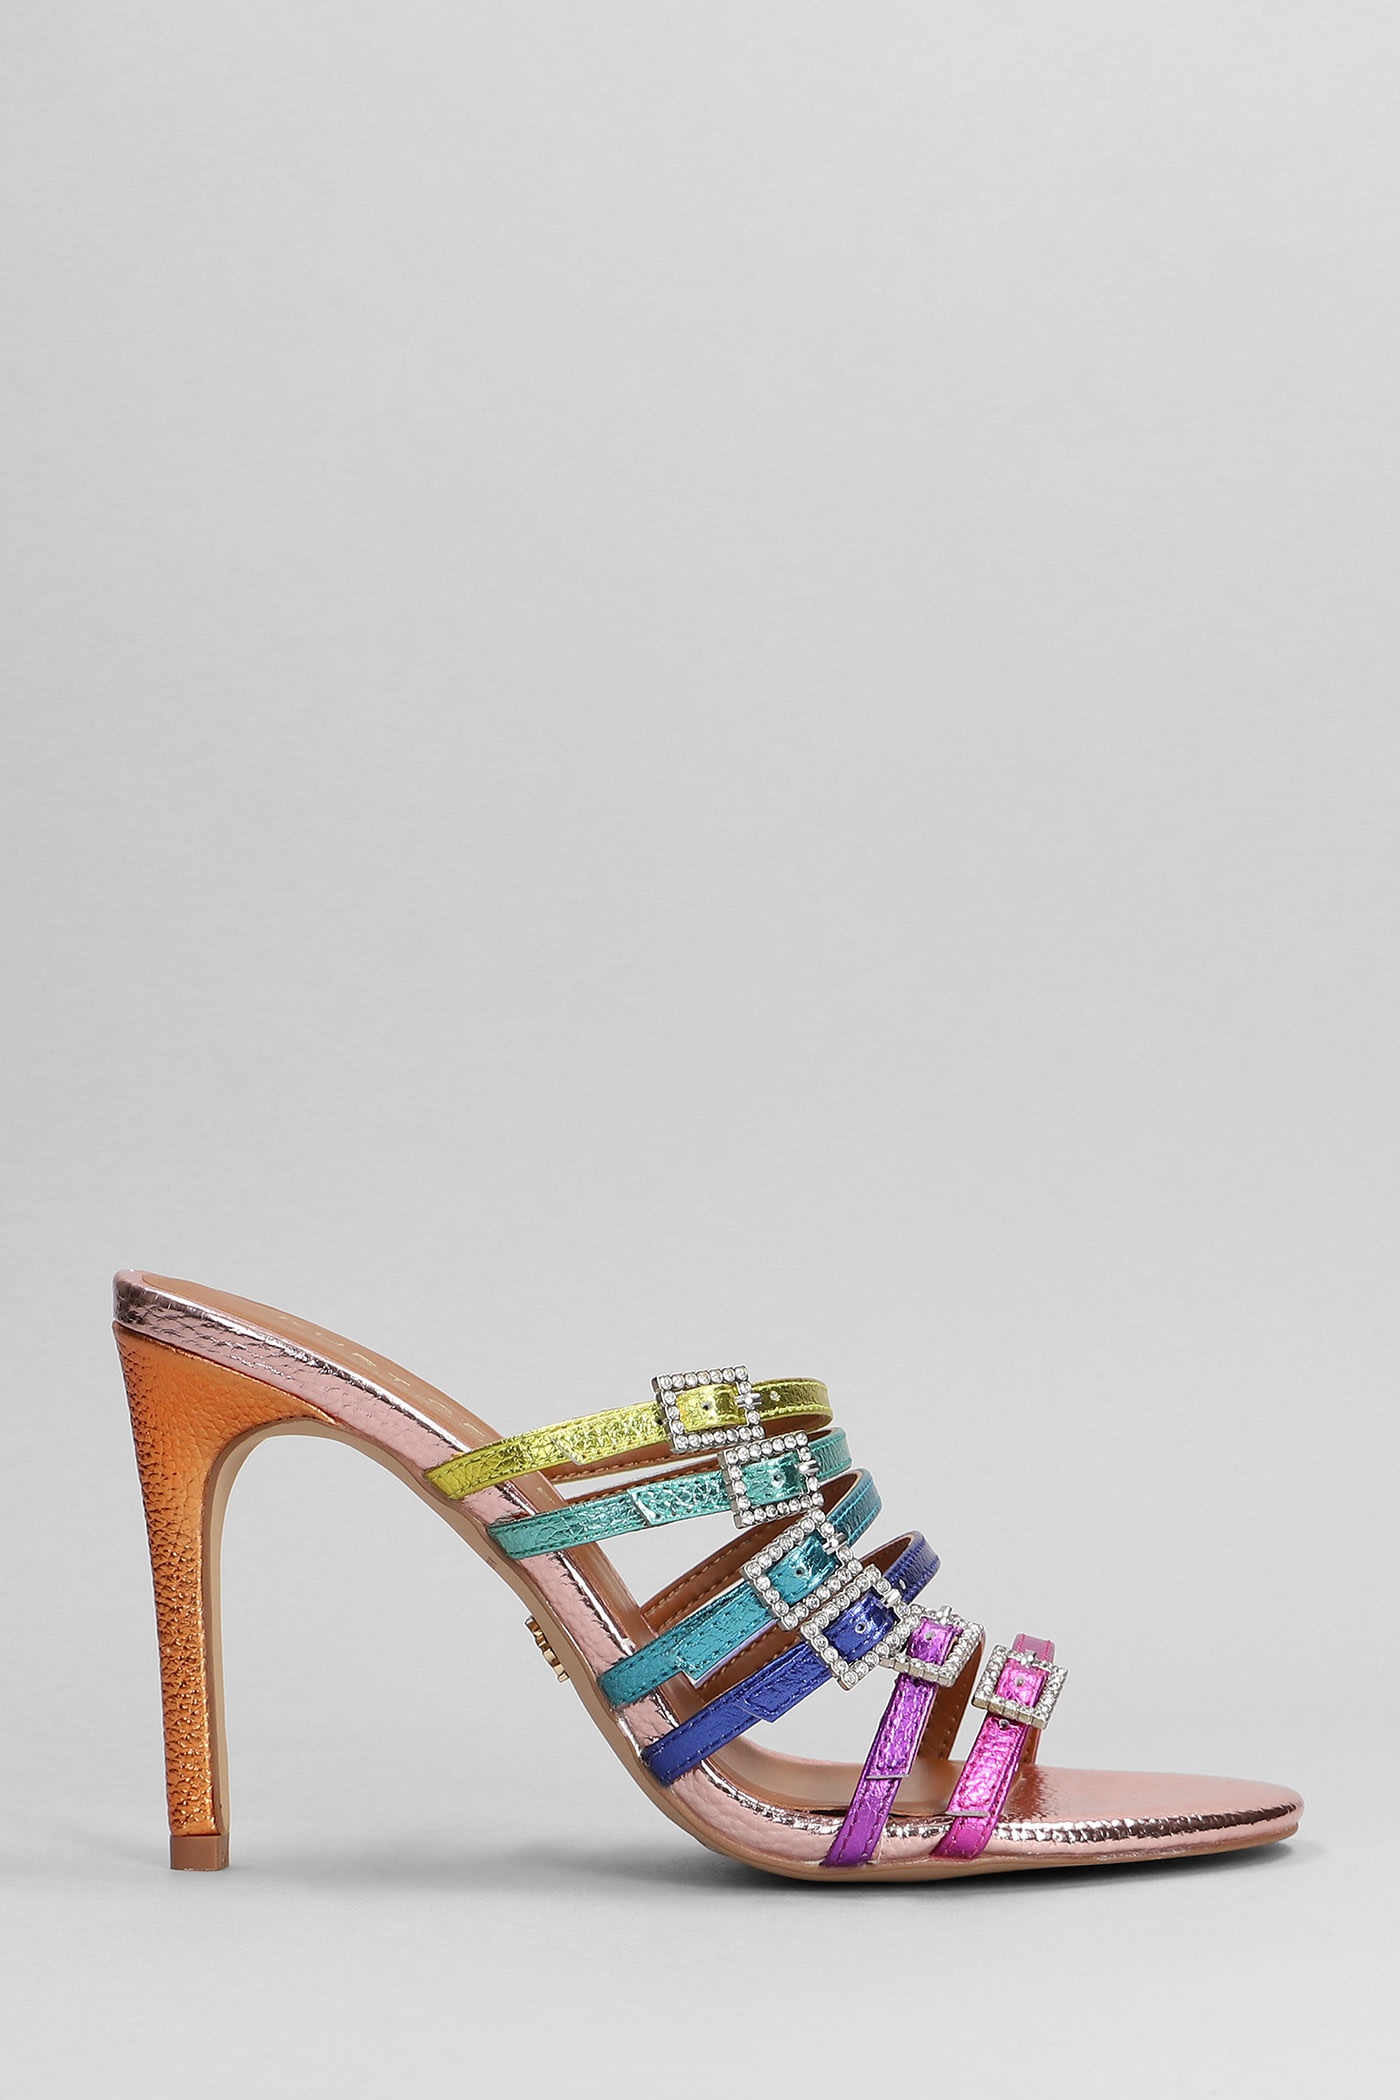 Kurt Geiger Pierre Mule Sandals In Multicolor Leather